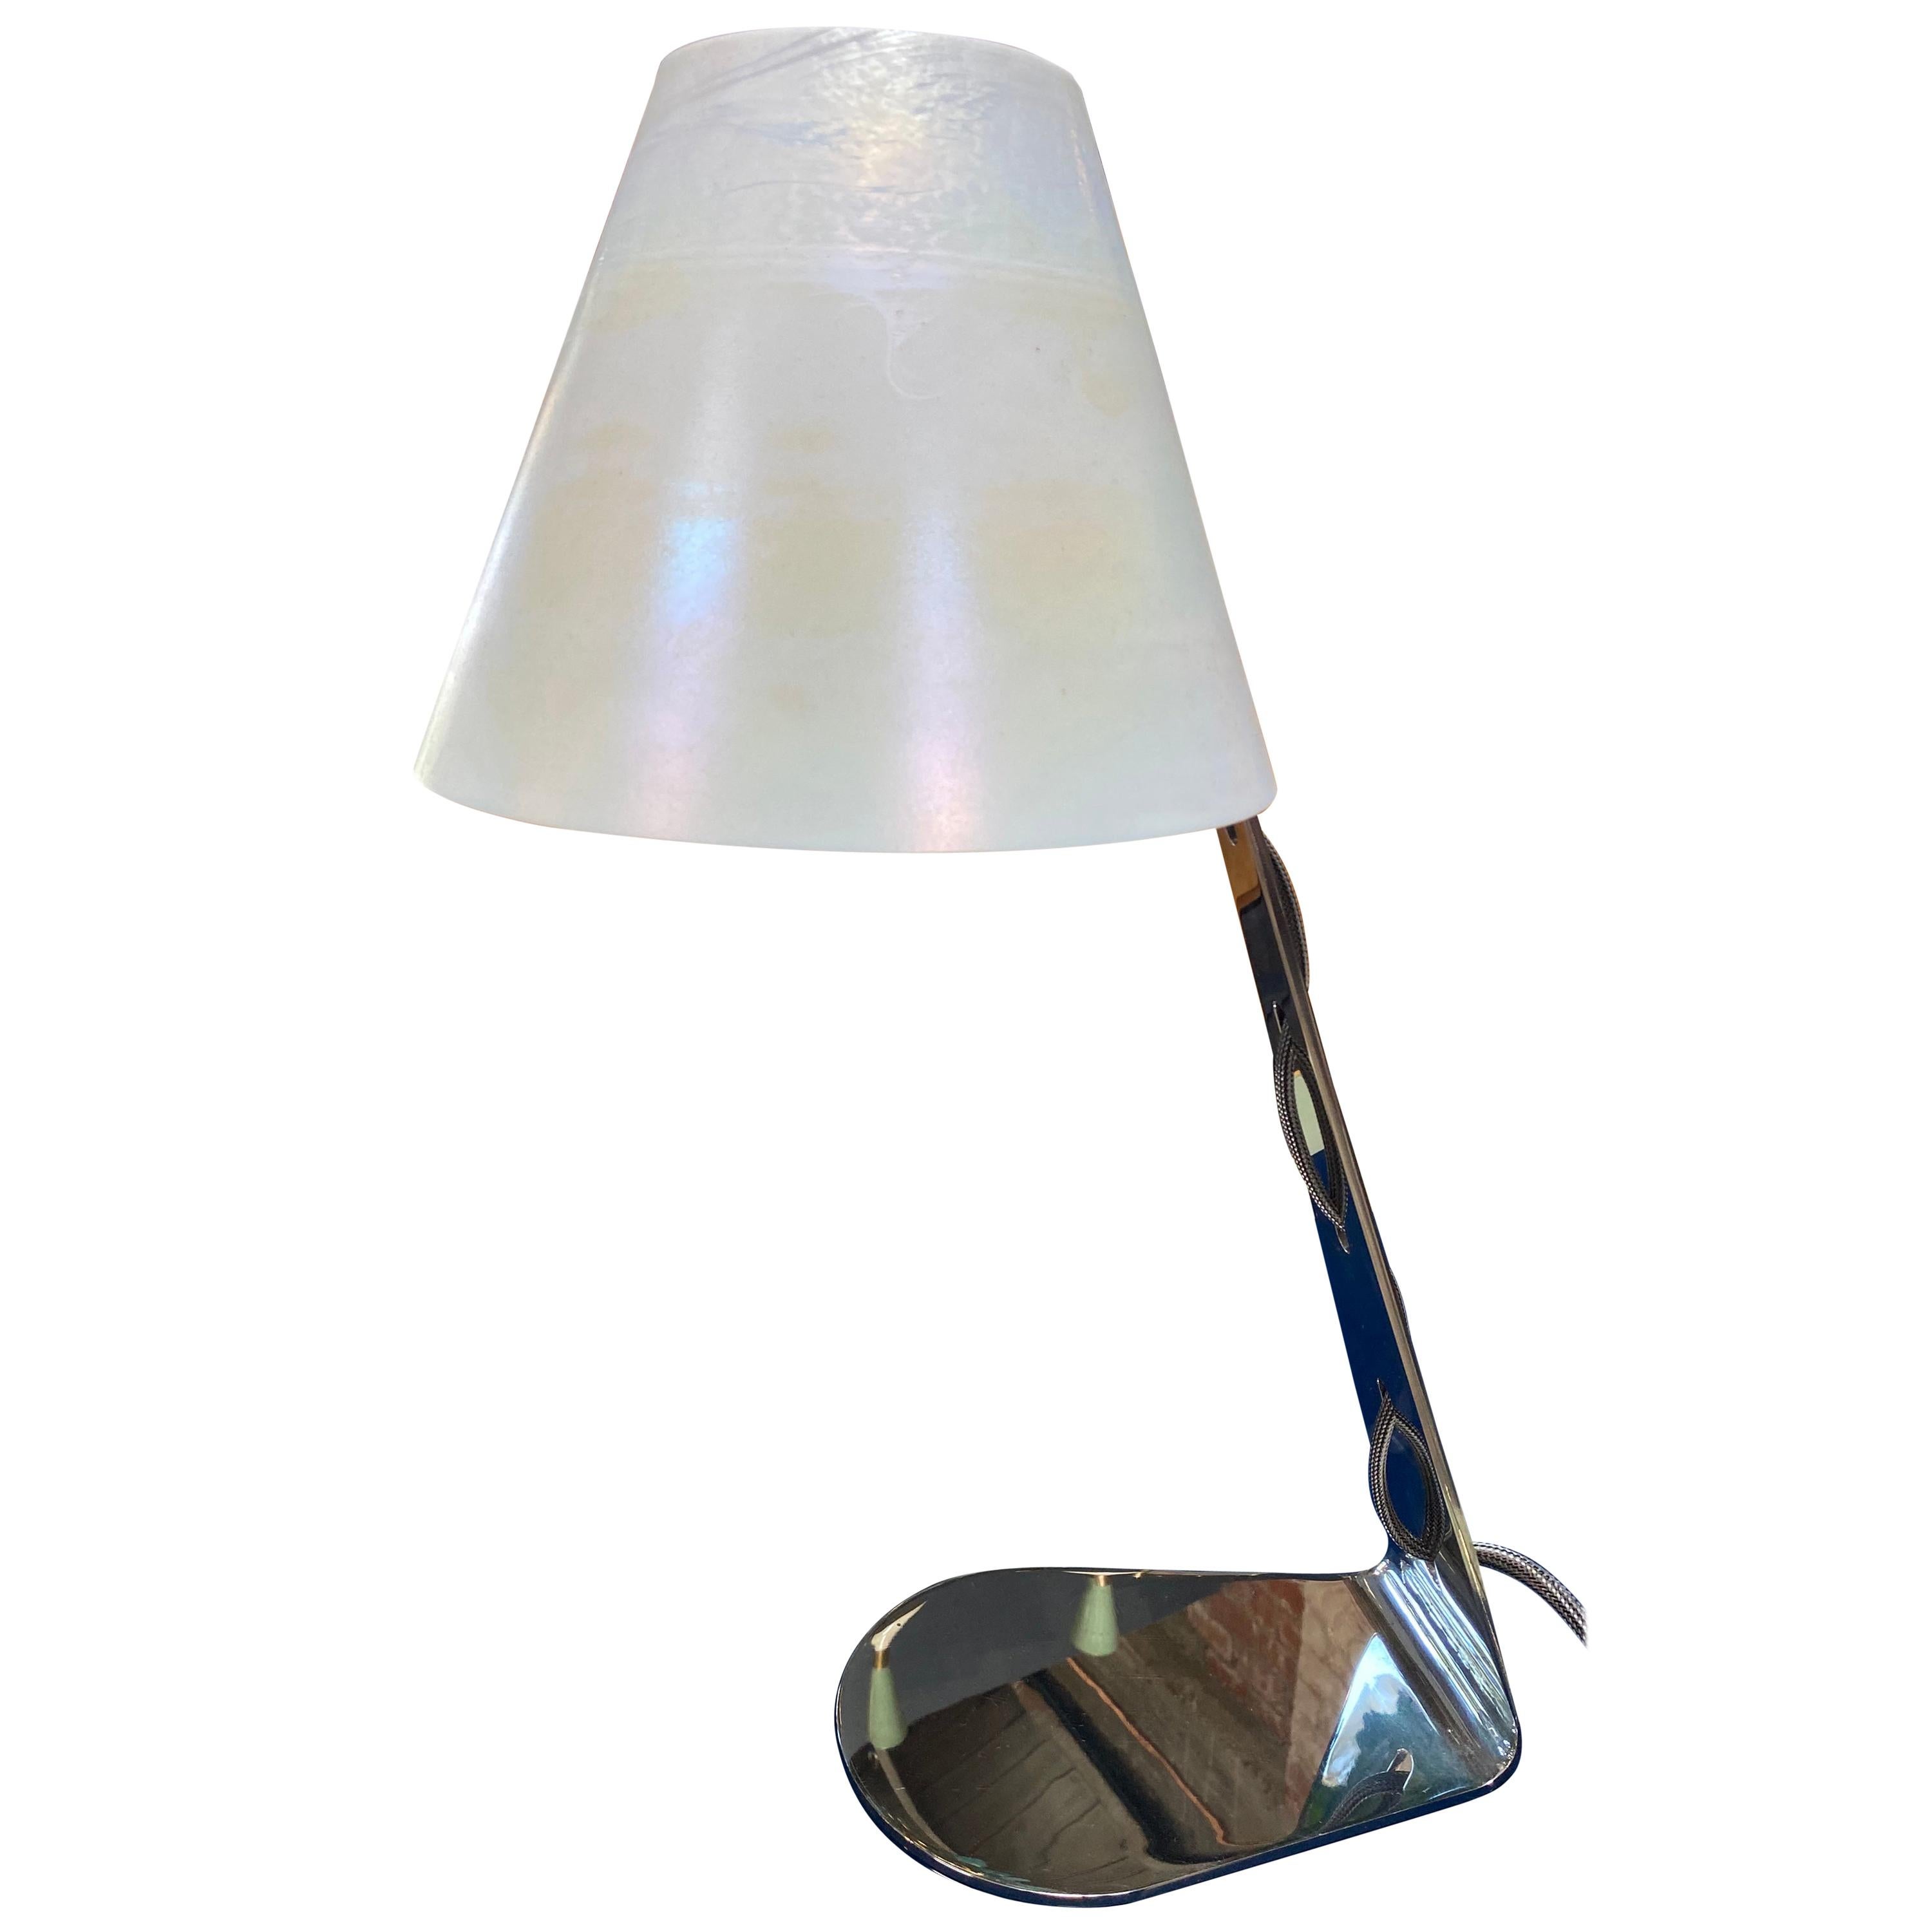 New Italian Midcentury Chrome and Murano Glass Desk Lamp, 2000s For Sale